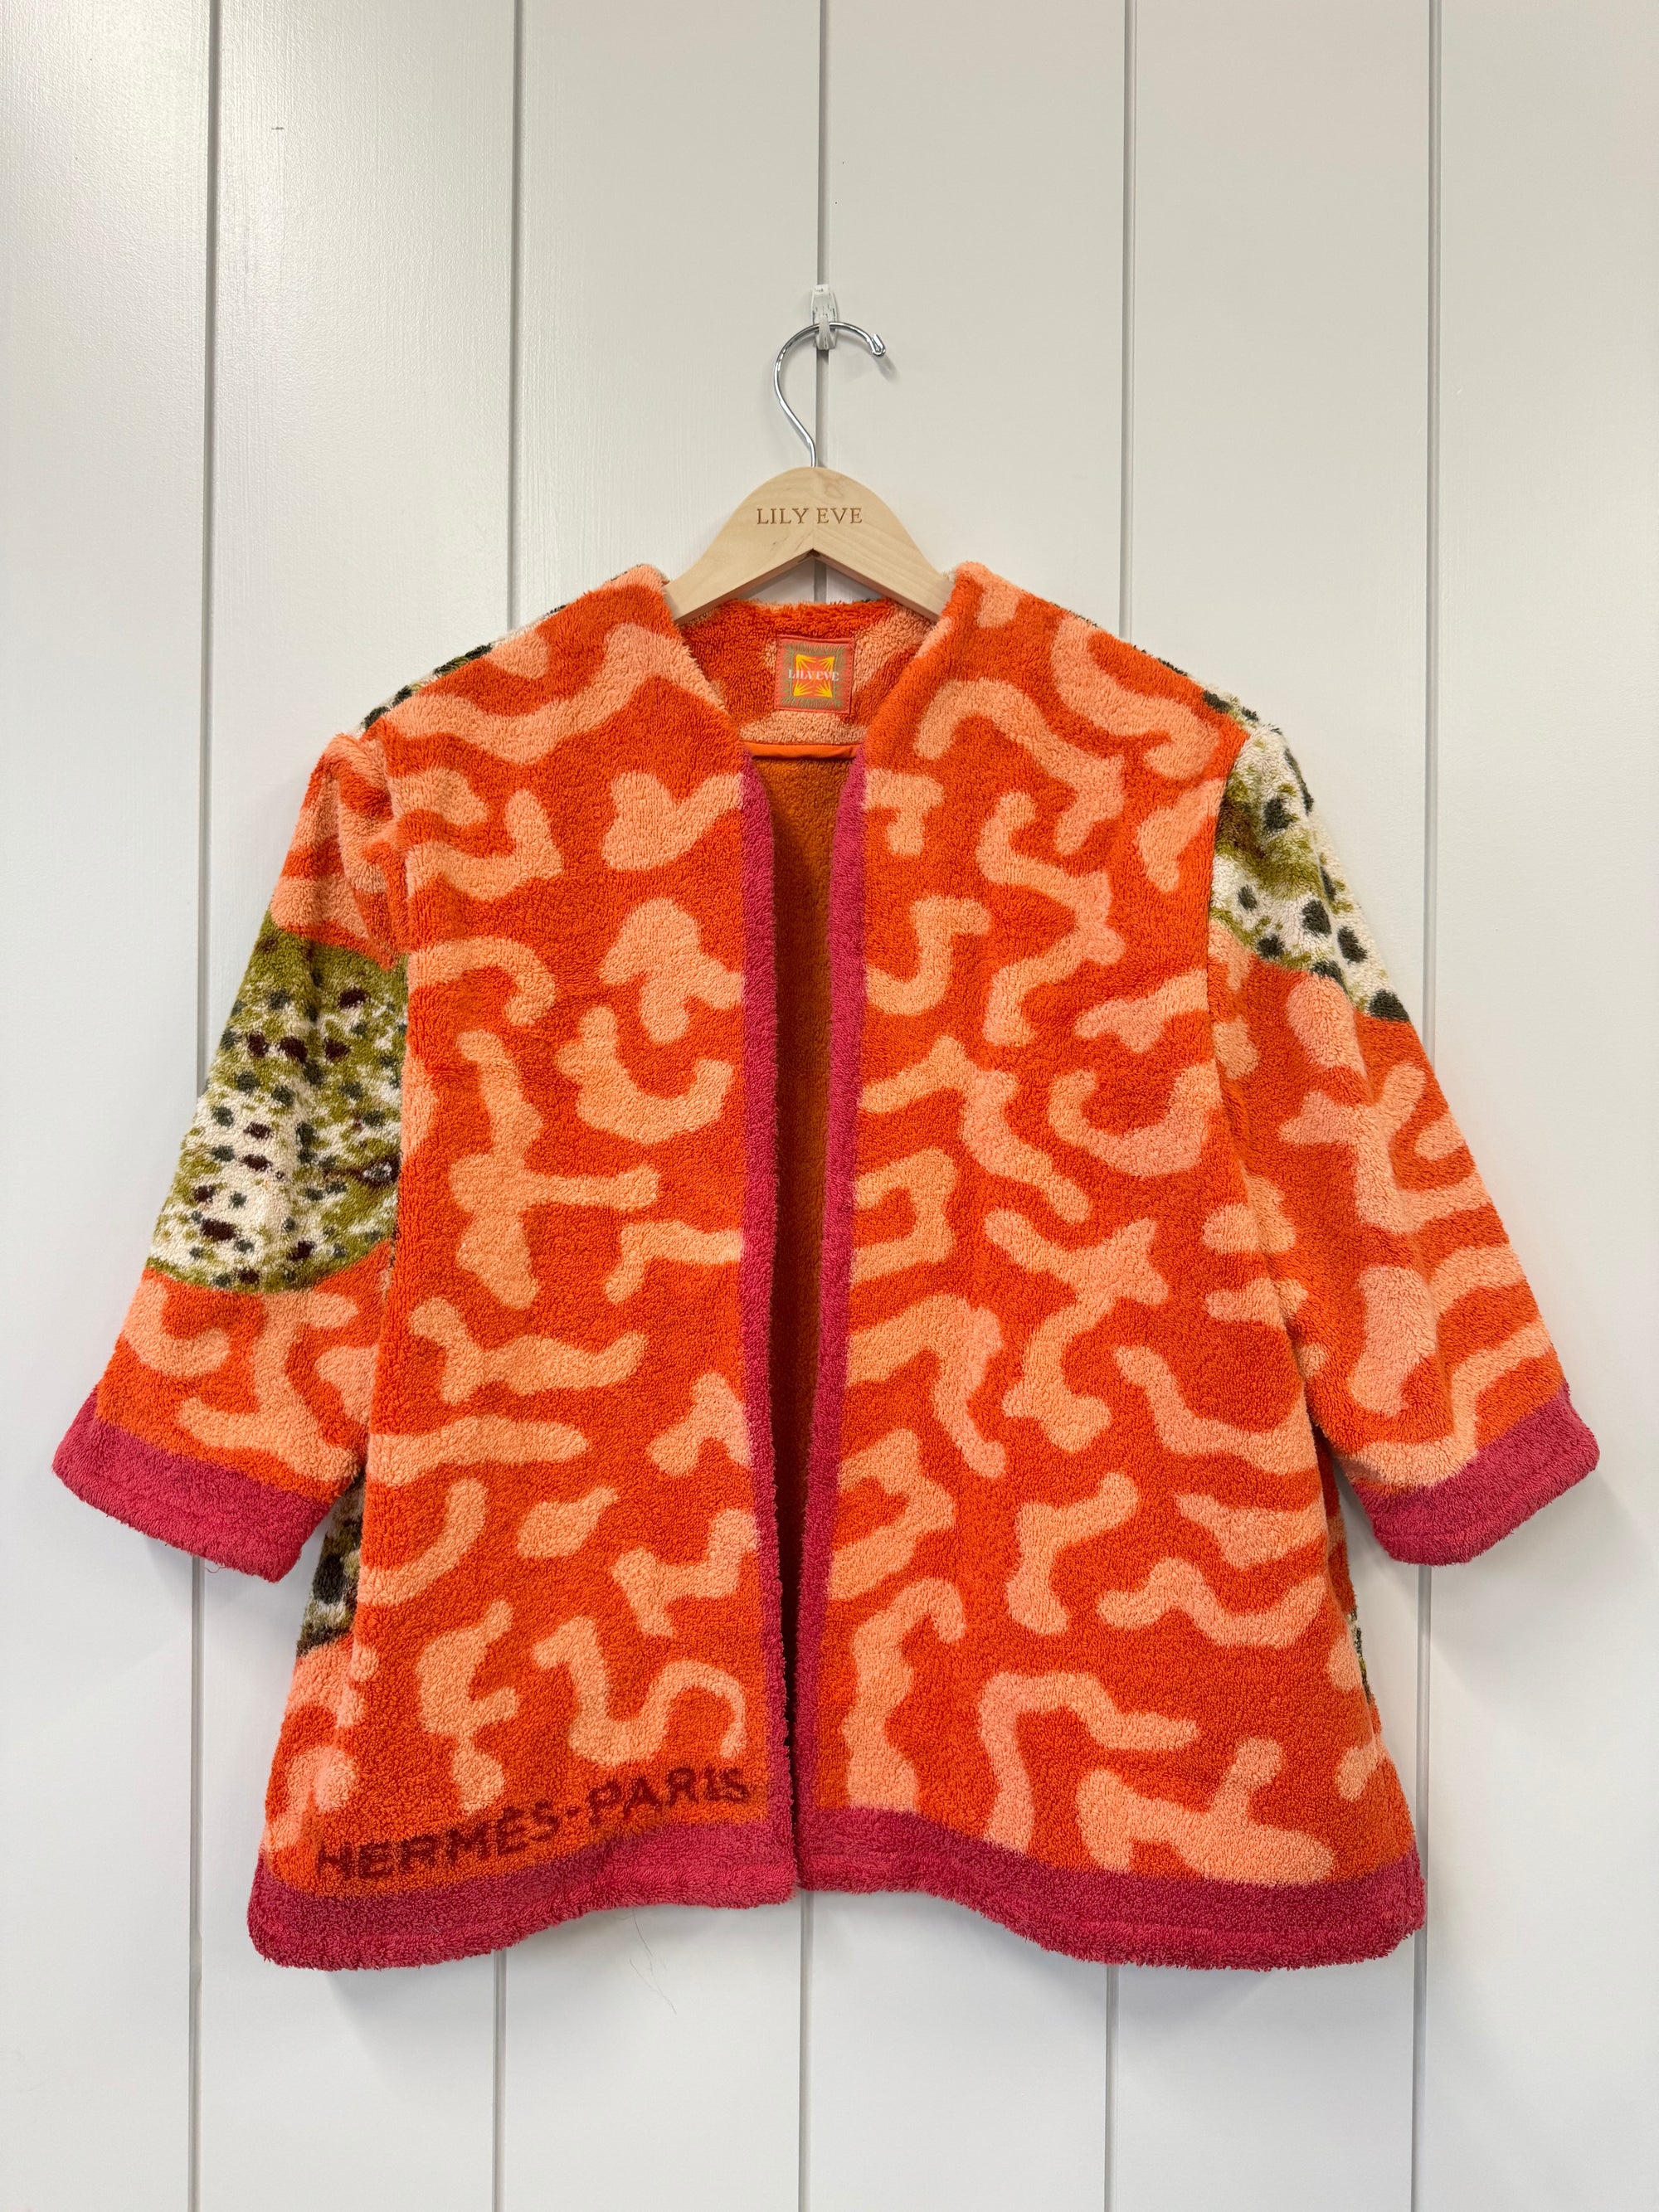 The Pink Leopard Jacket